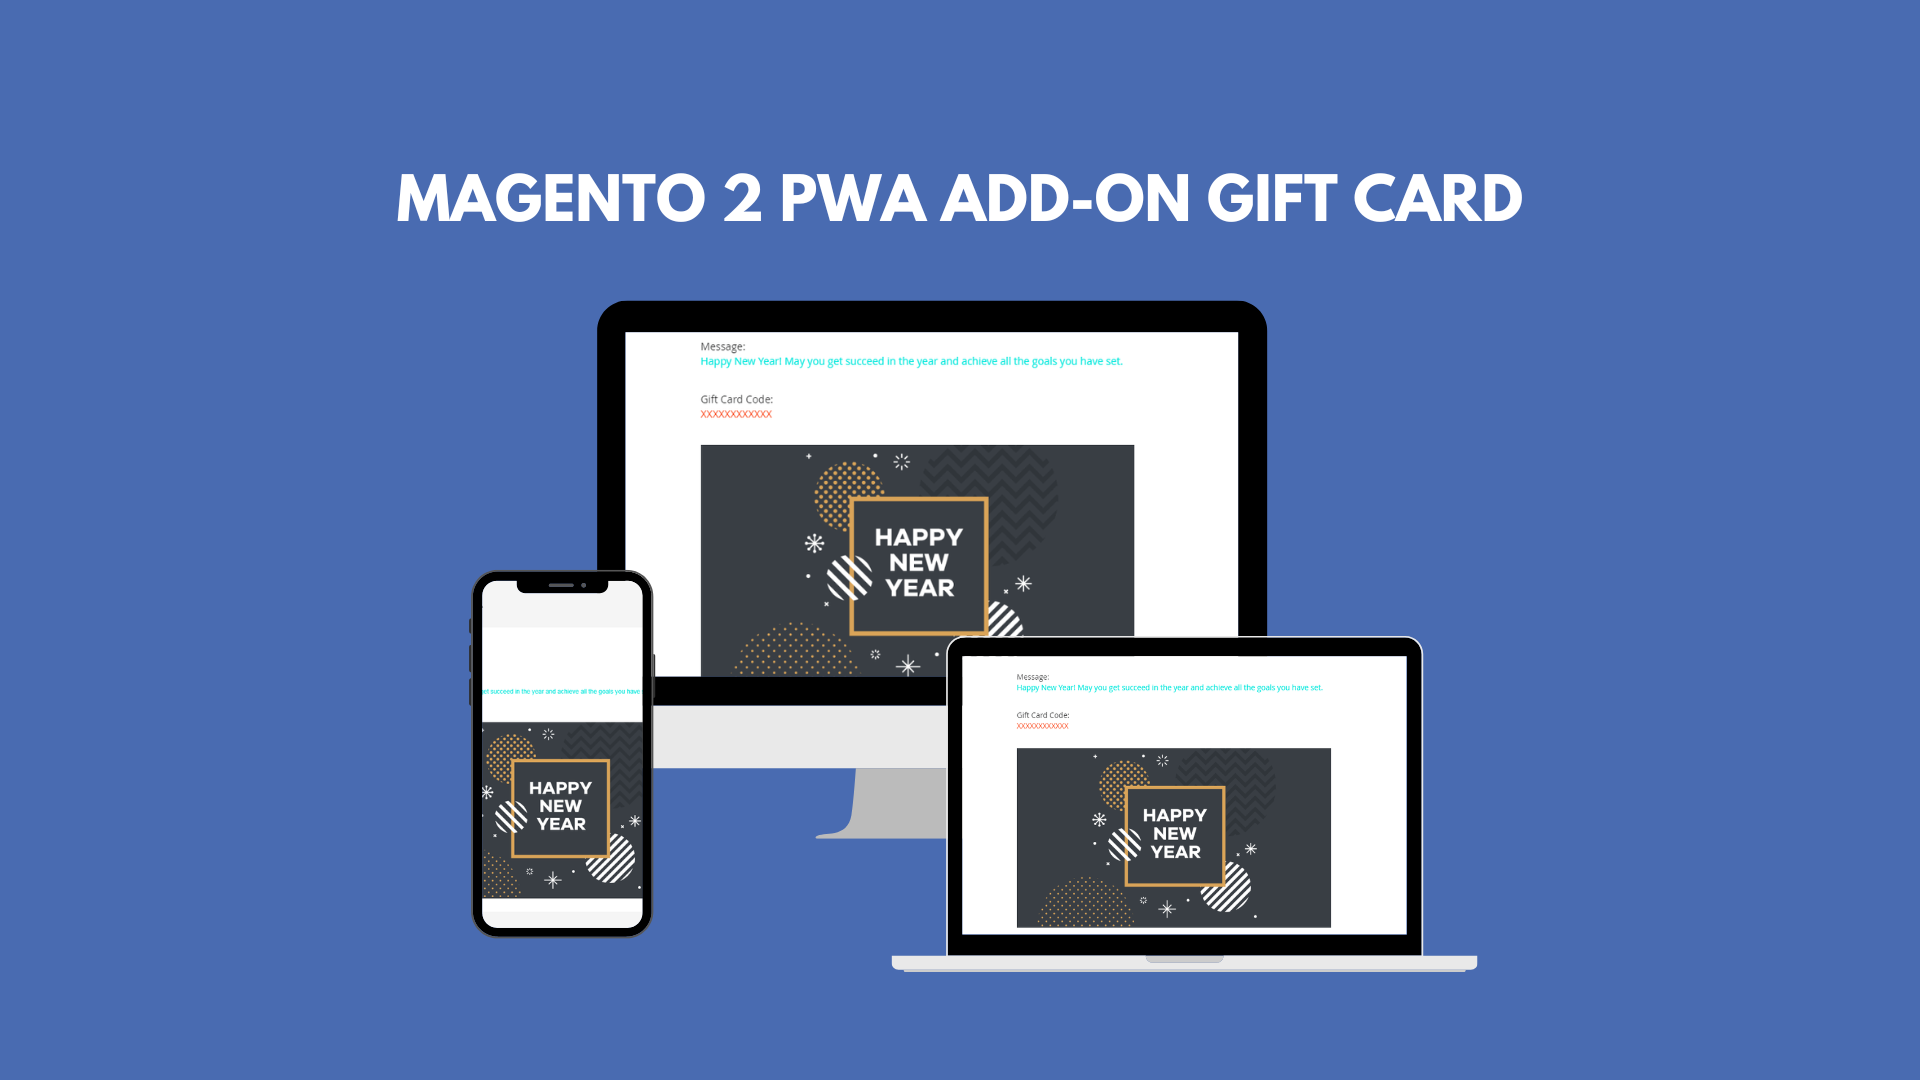 Magento 2 PWA Add-on Gift Card